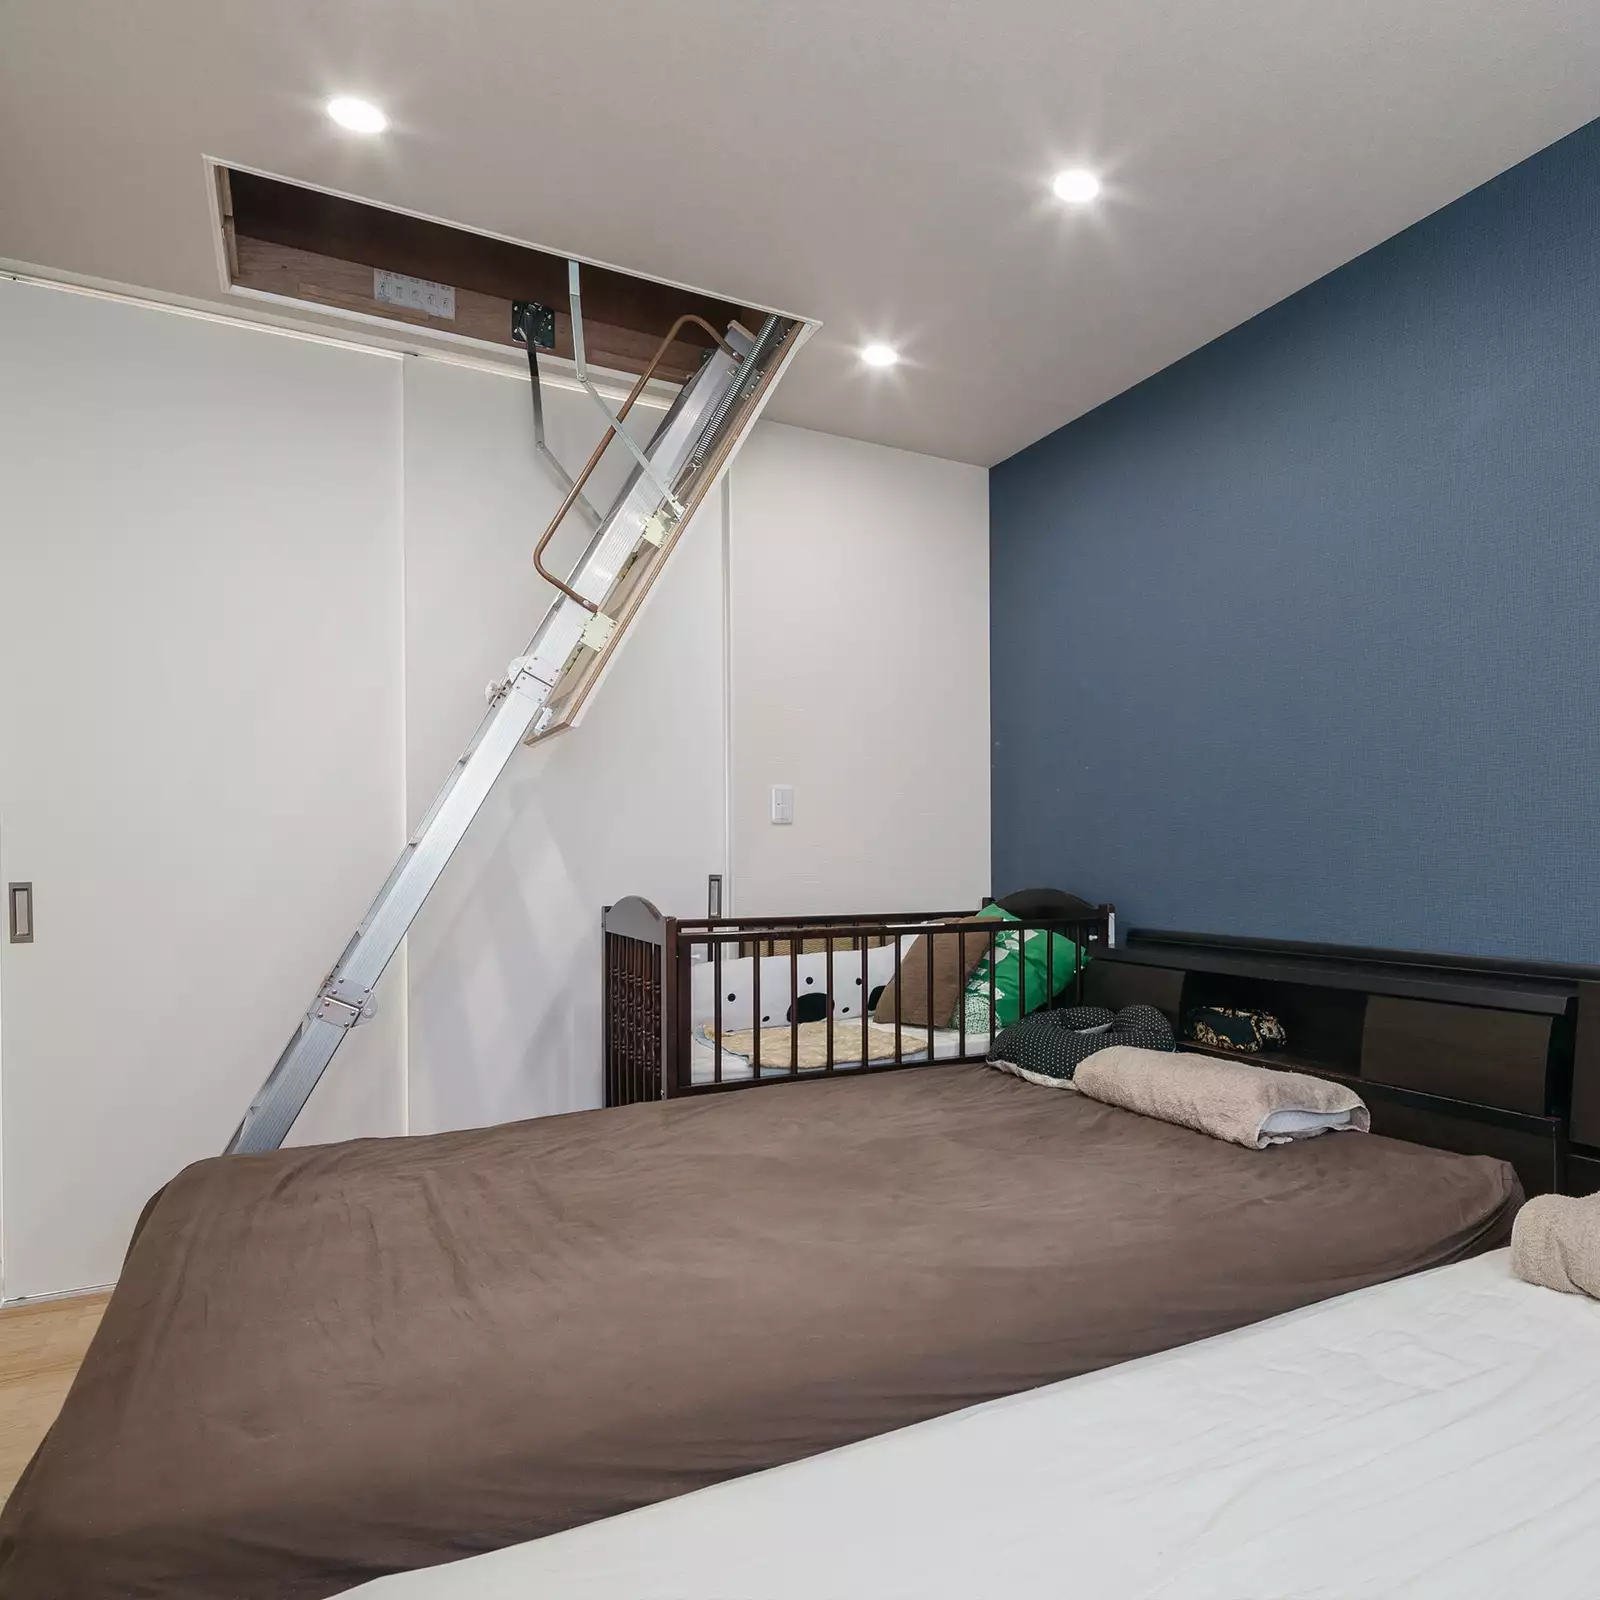 R+houseの物件の寝室の写真です。ベッドがあり、奥には扉。その間の天井から階段が下りており上るとロフトにいける。